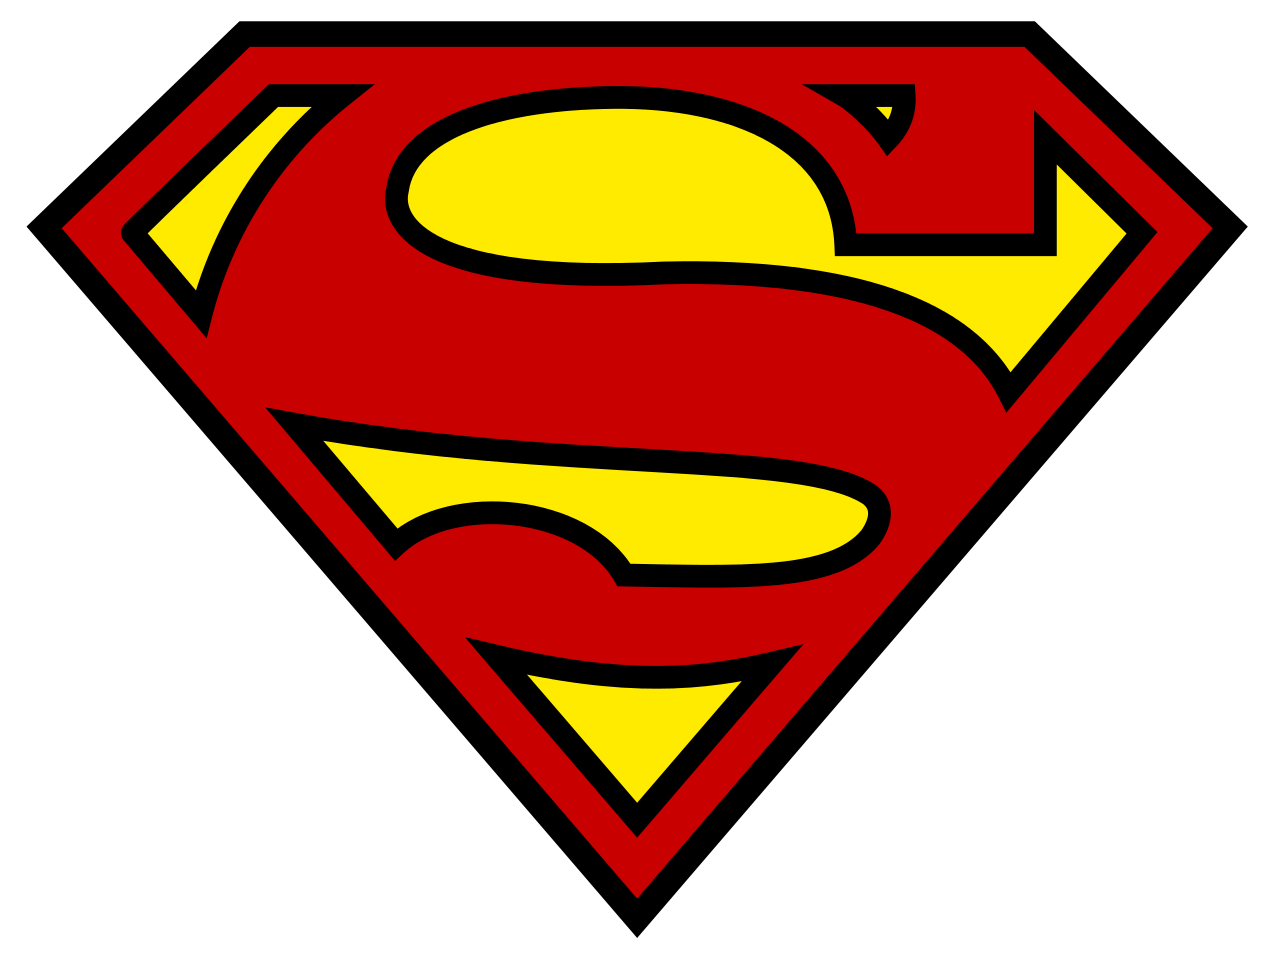 Superman logo - Wikipedia, the free encyclopedia